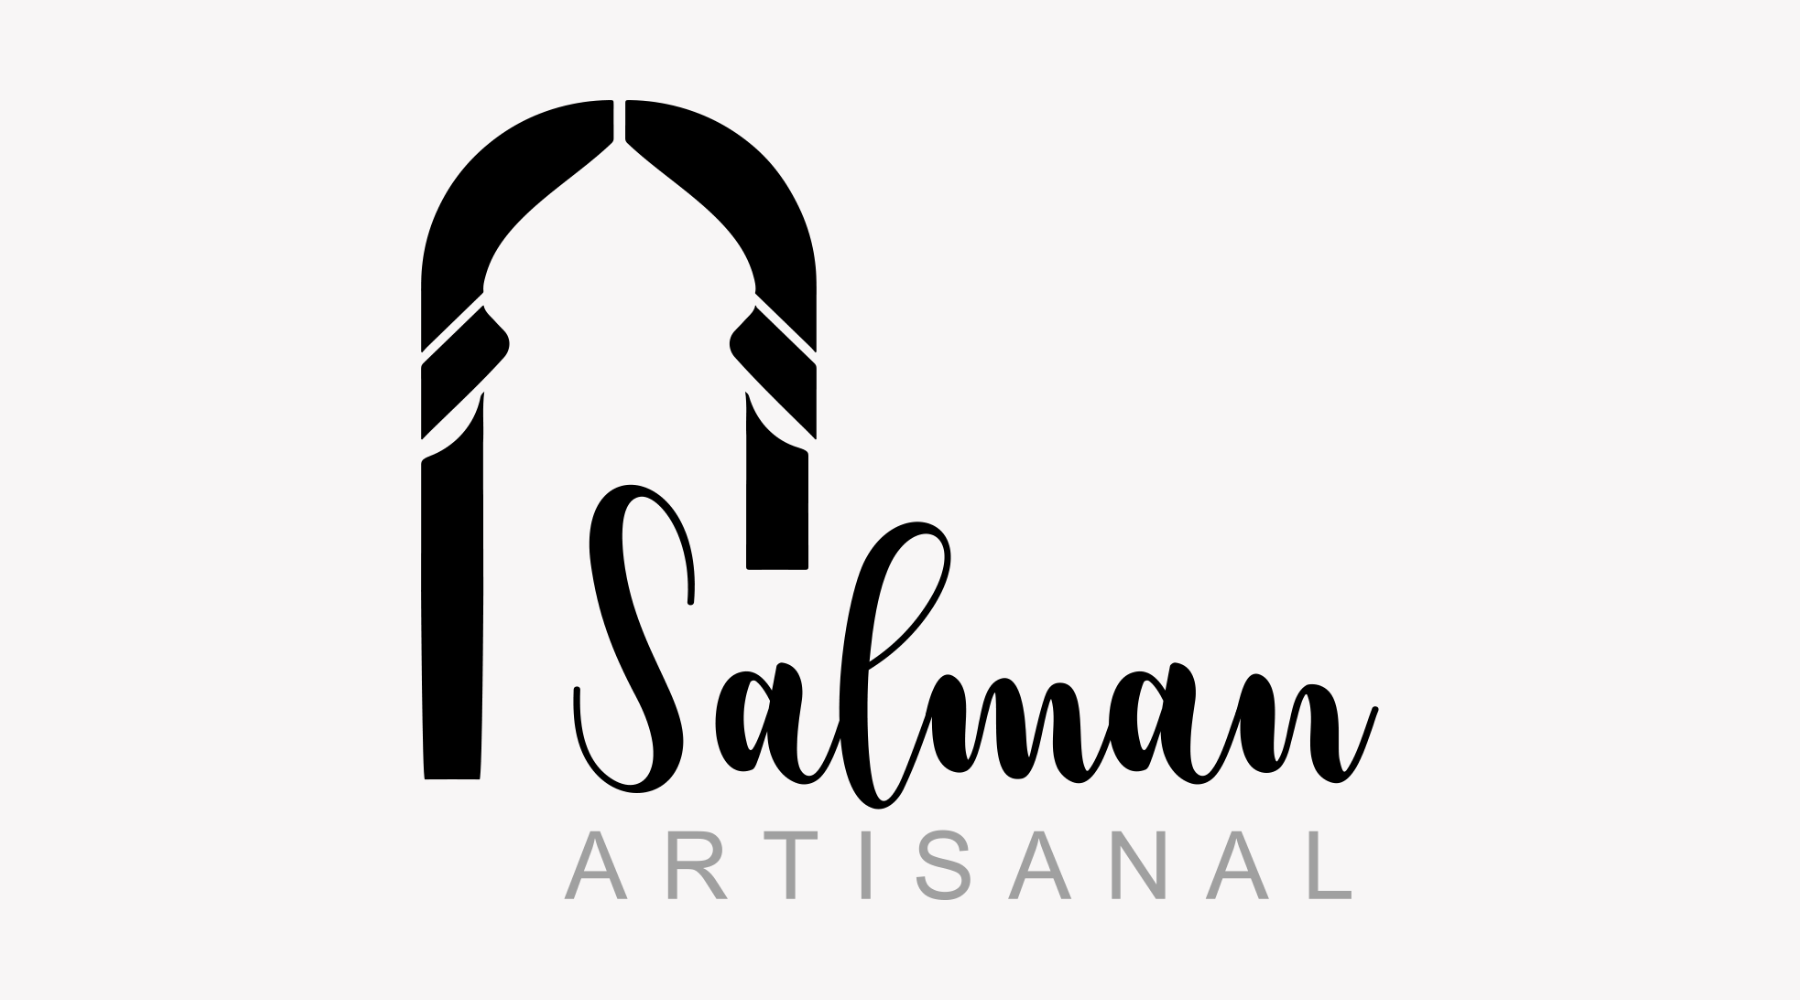 Salman Artisanal